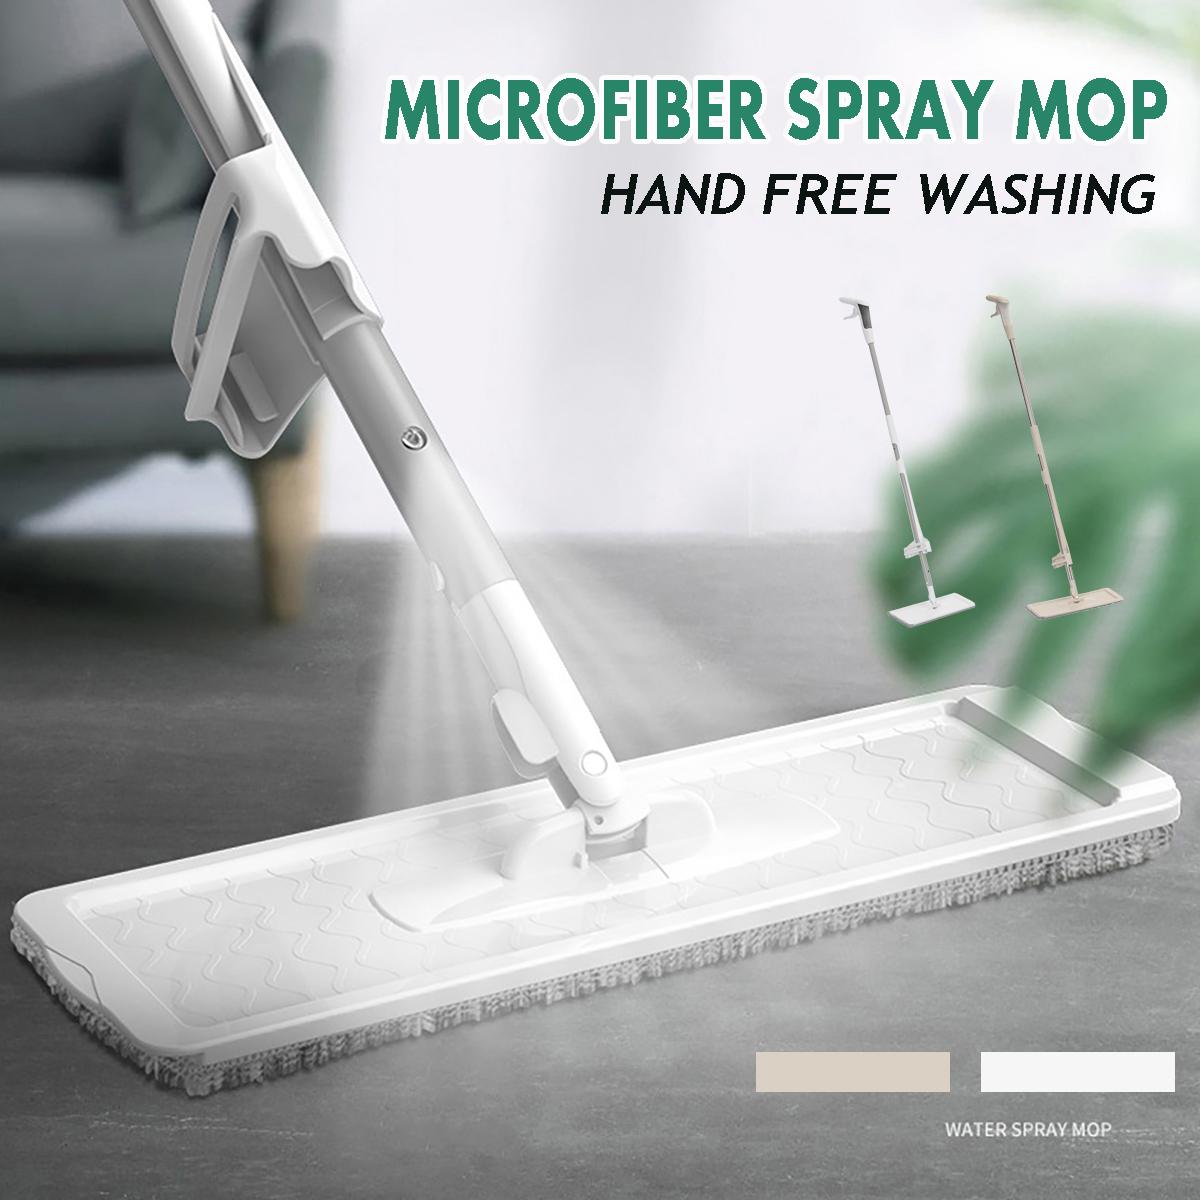 Microfiber-Spray-Mop-Floor-Cleaning-Washable-Pads-Flat-Head-Home-Floor-Dust-1759556-1